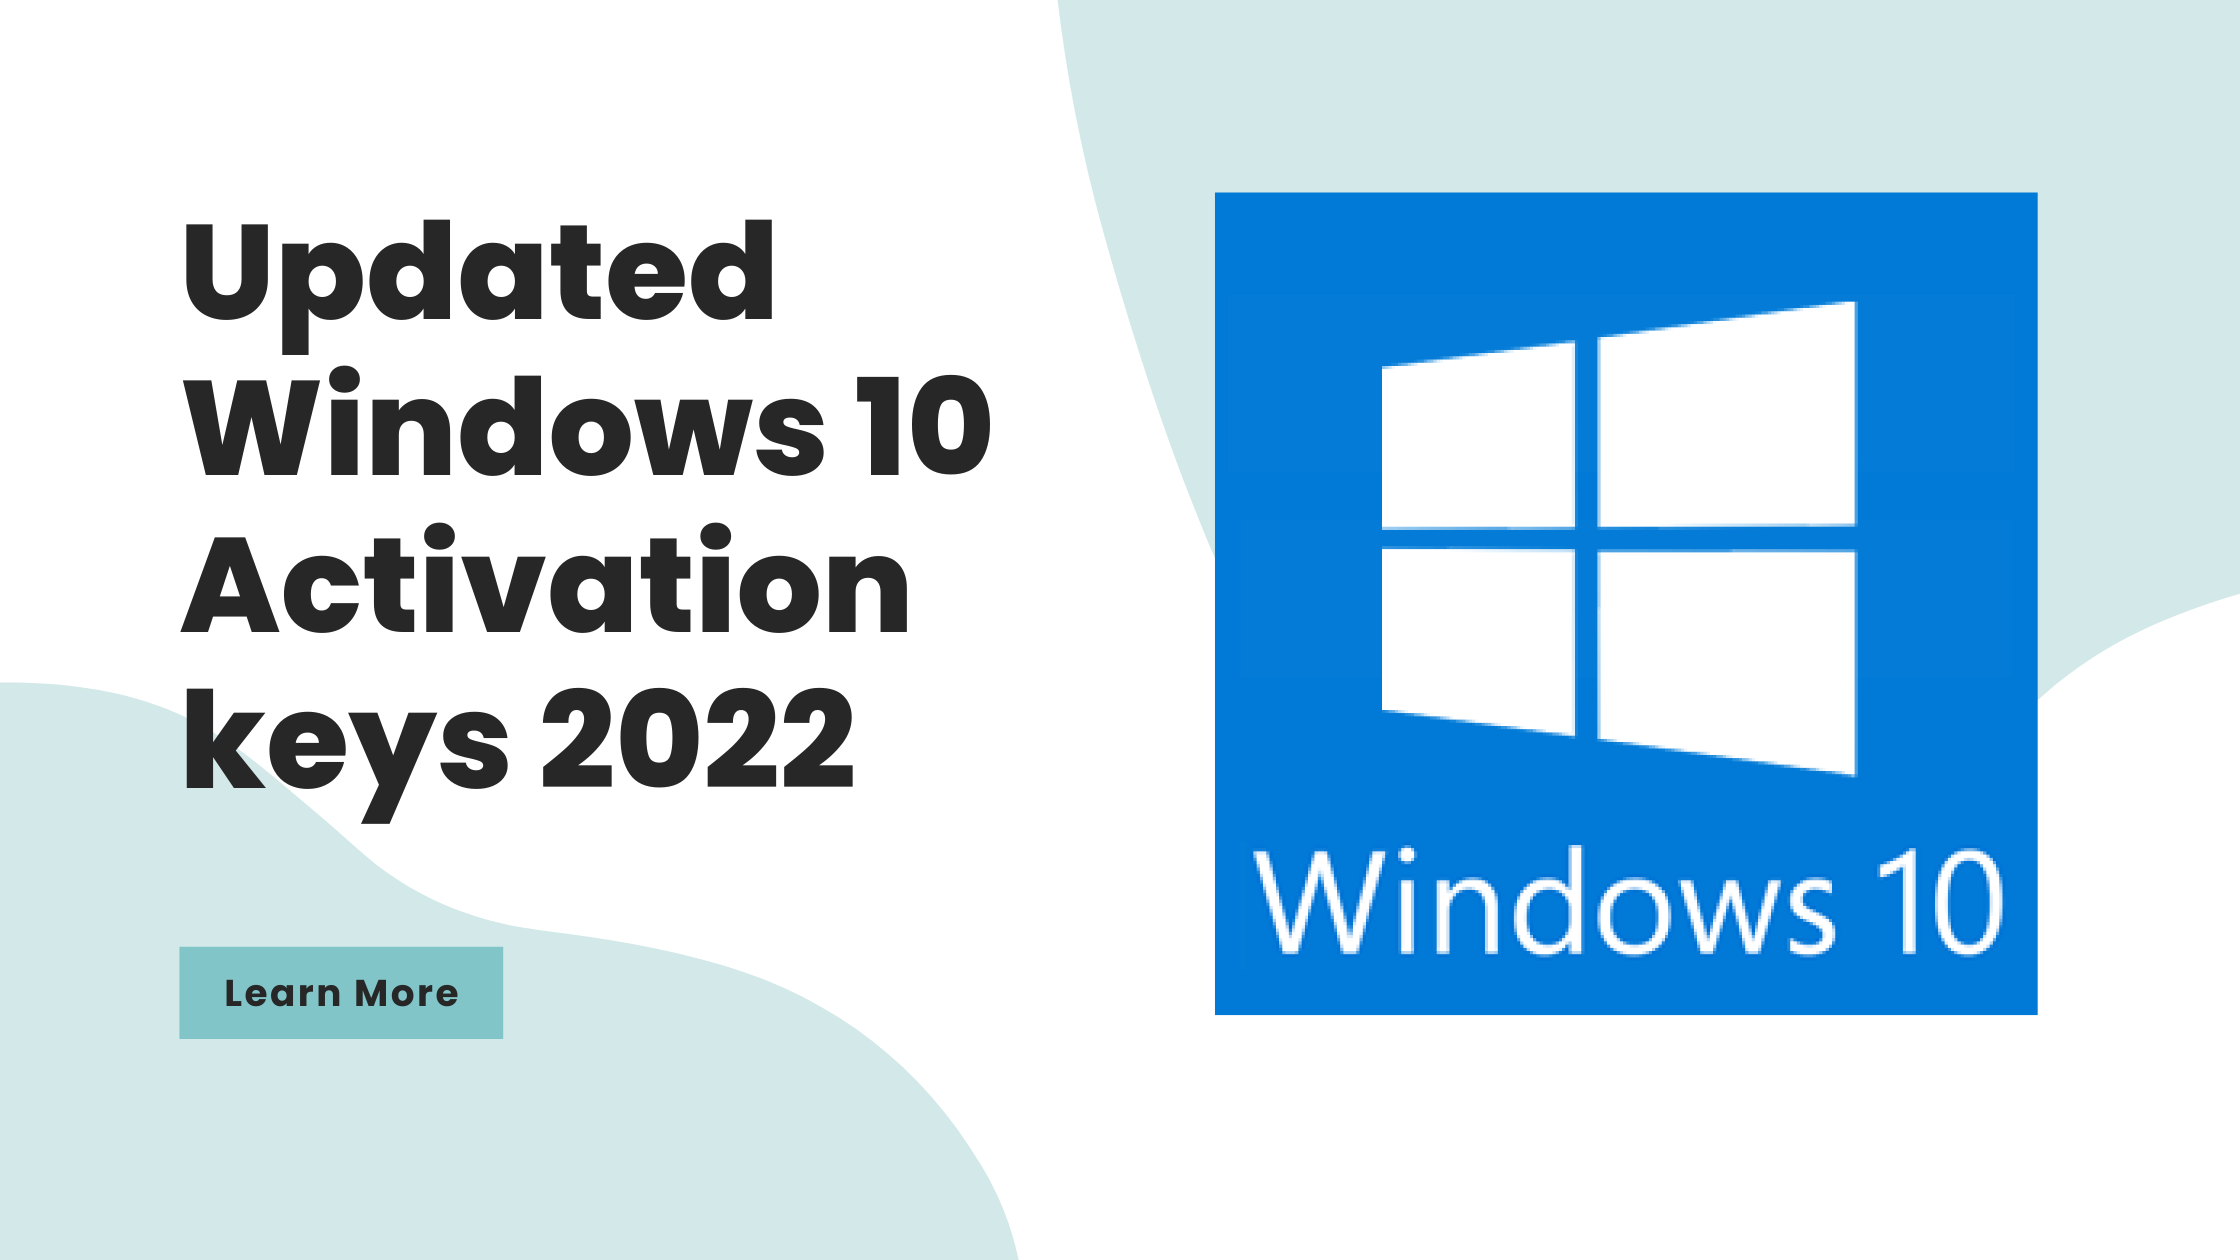 Updated Windows 10 Activation keys 2022